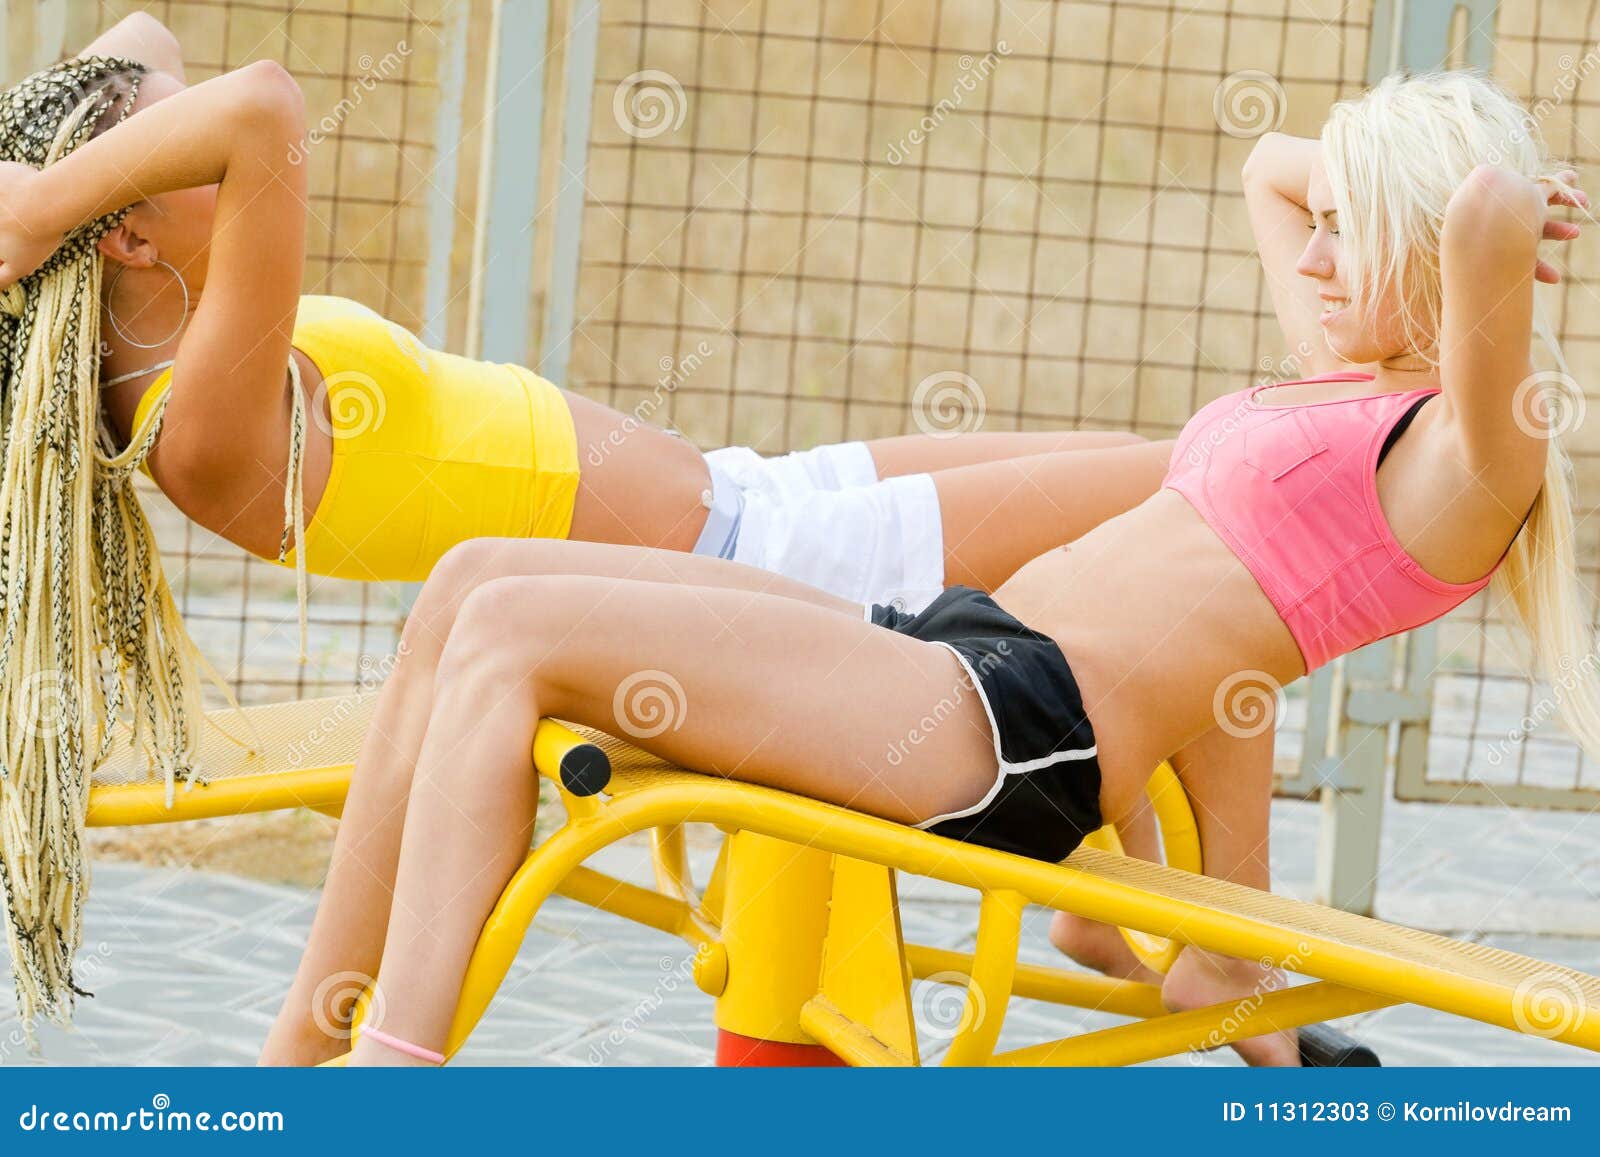 girl swimsuit - Playground